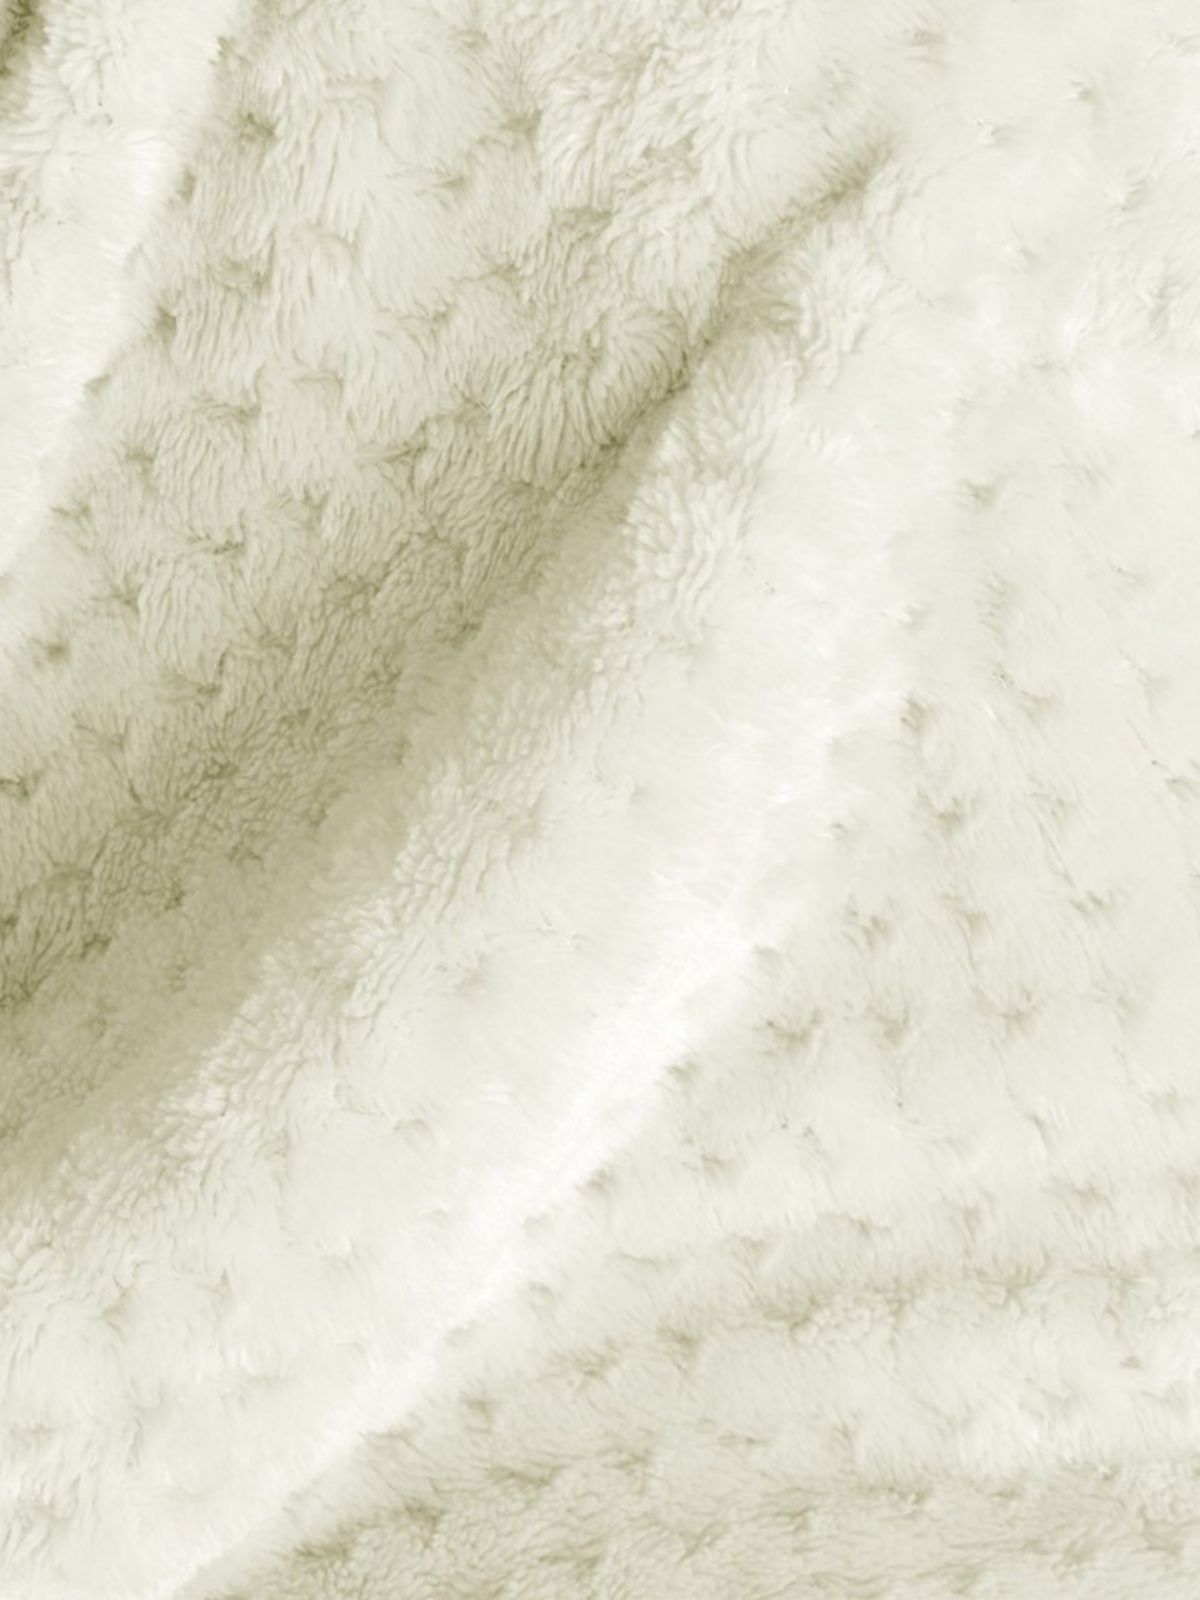 Plaid Coperta Shleepy in colore crema 70x150 cm.-5